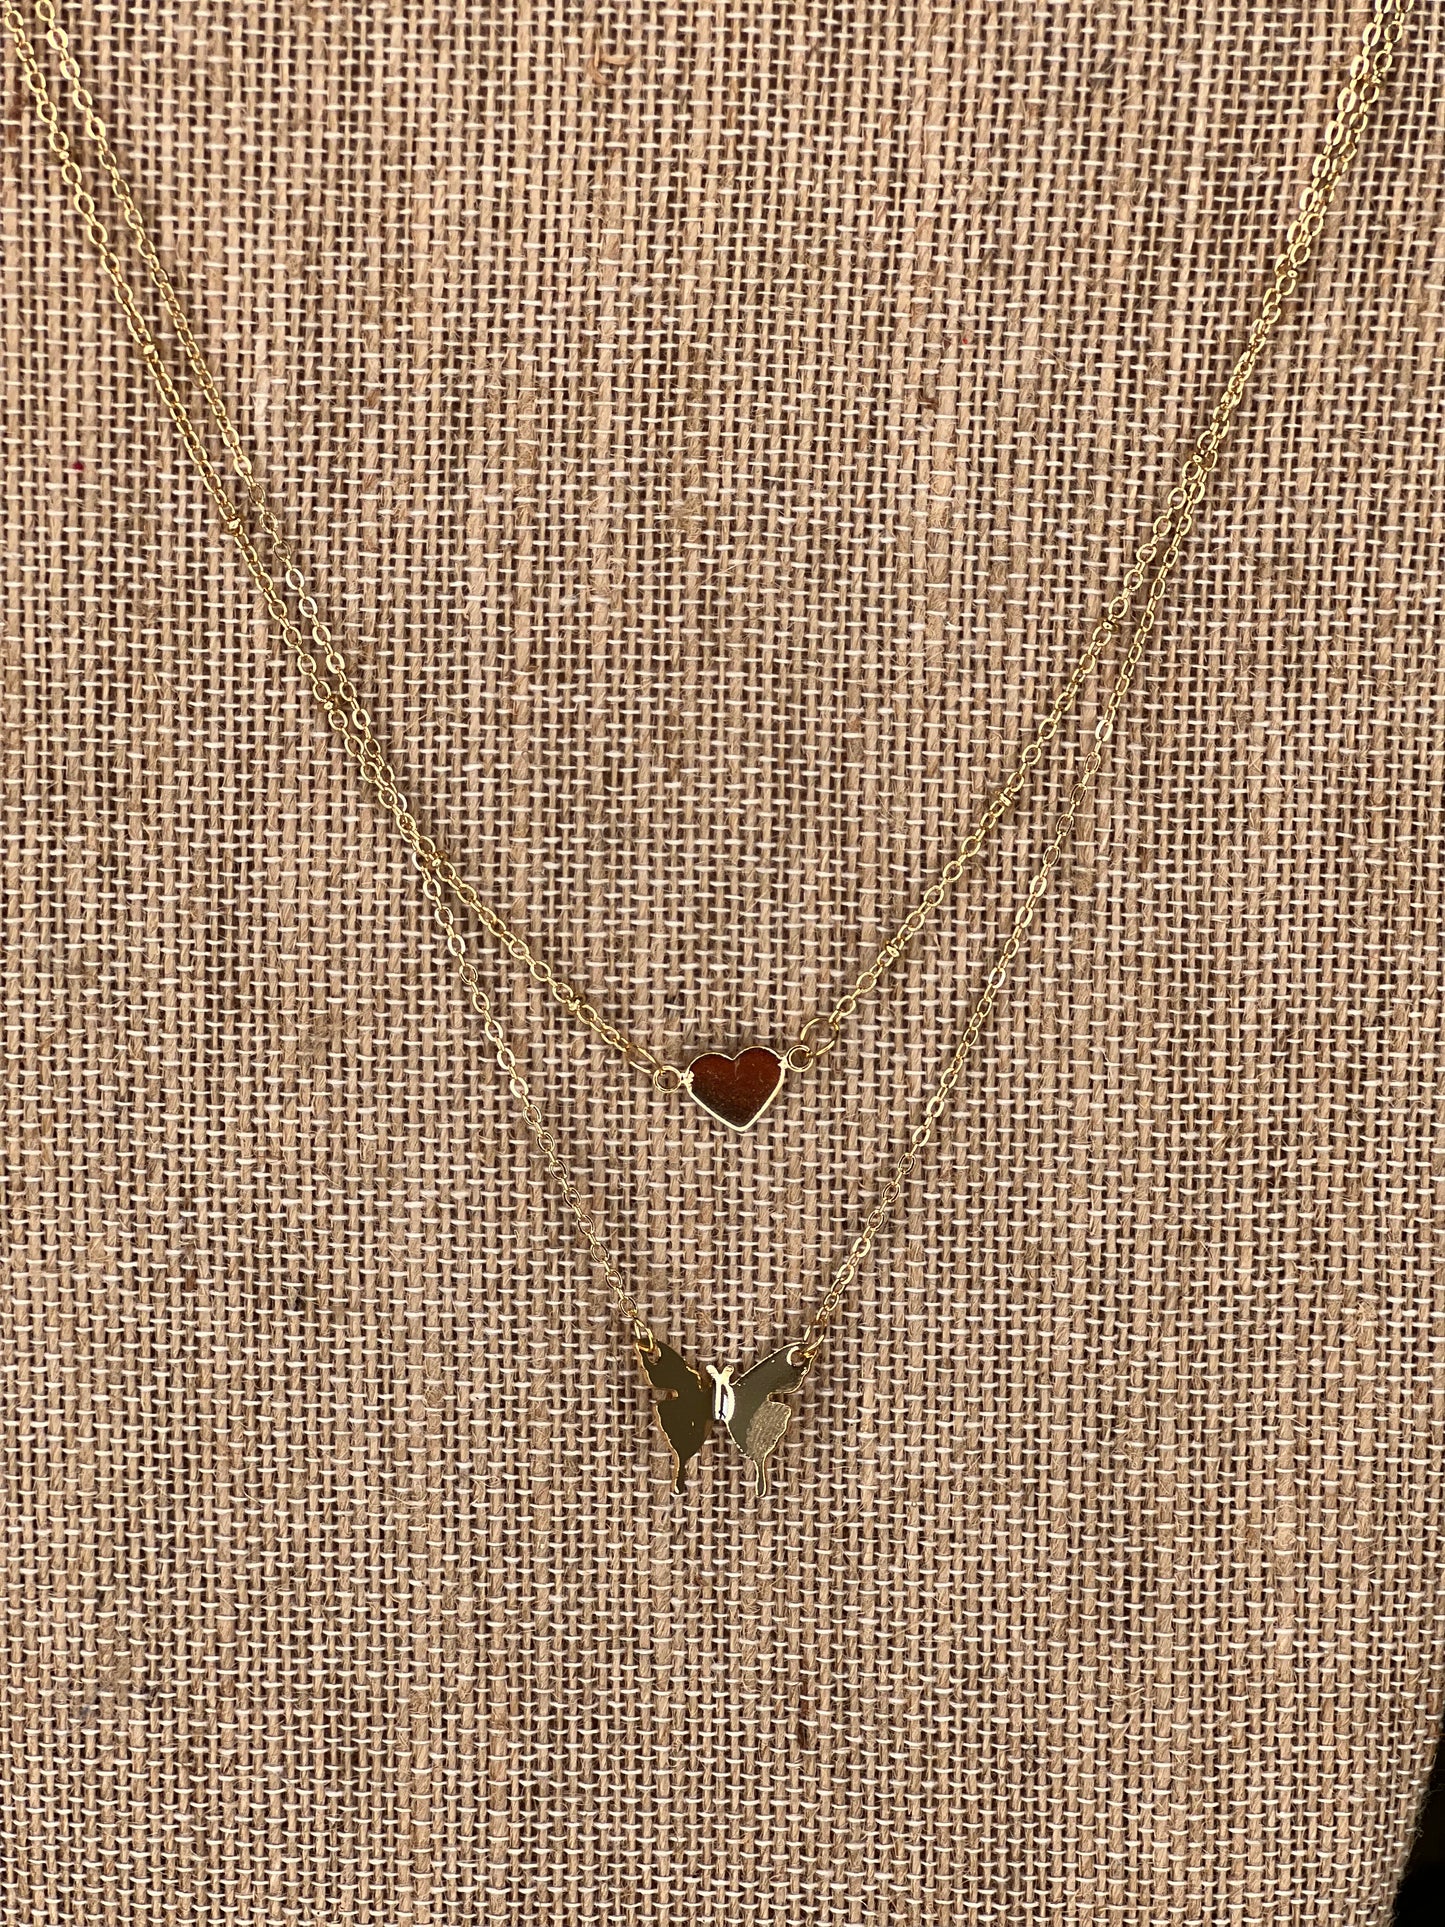 Sodajo Butterfly Charm Oval Link Layered Necklace